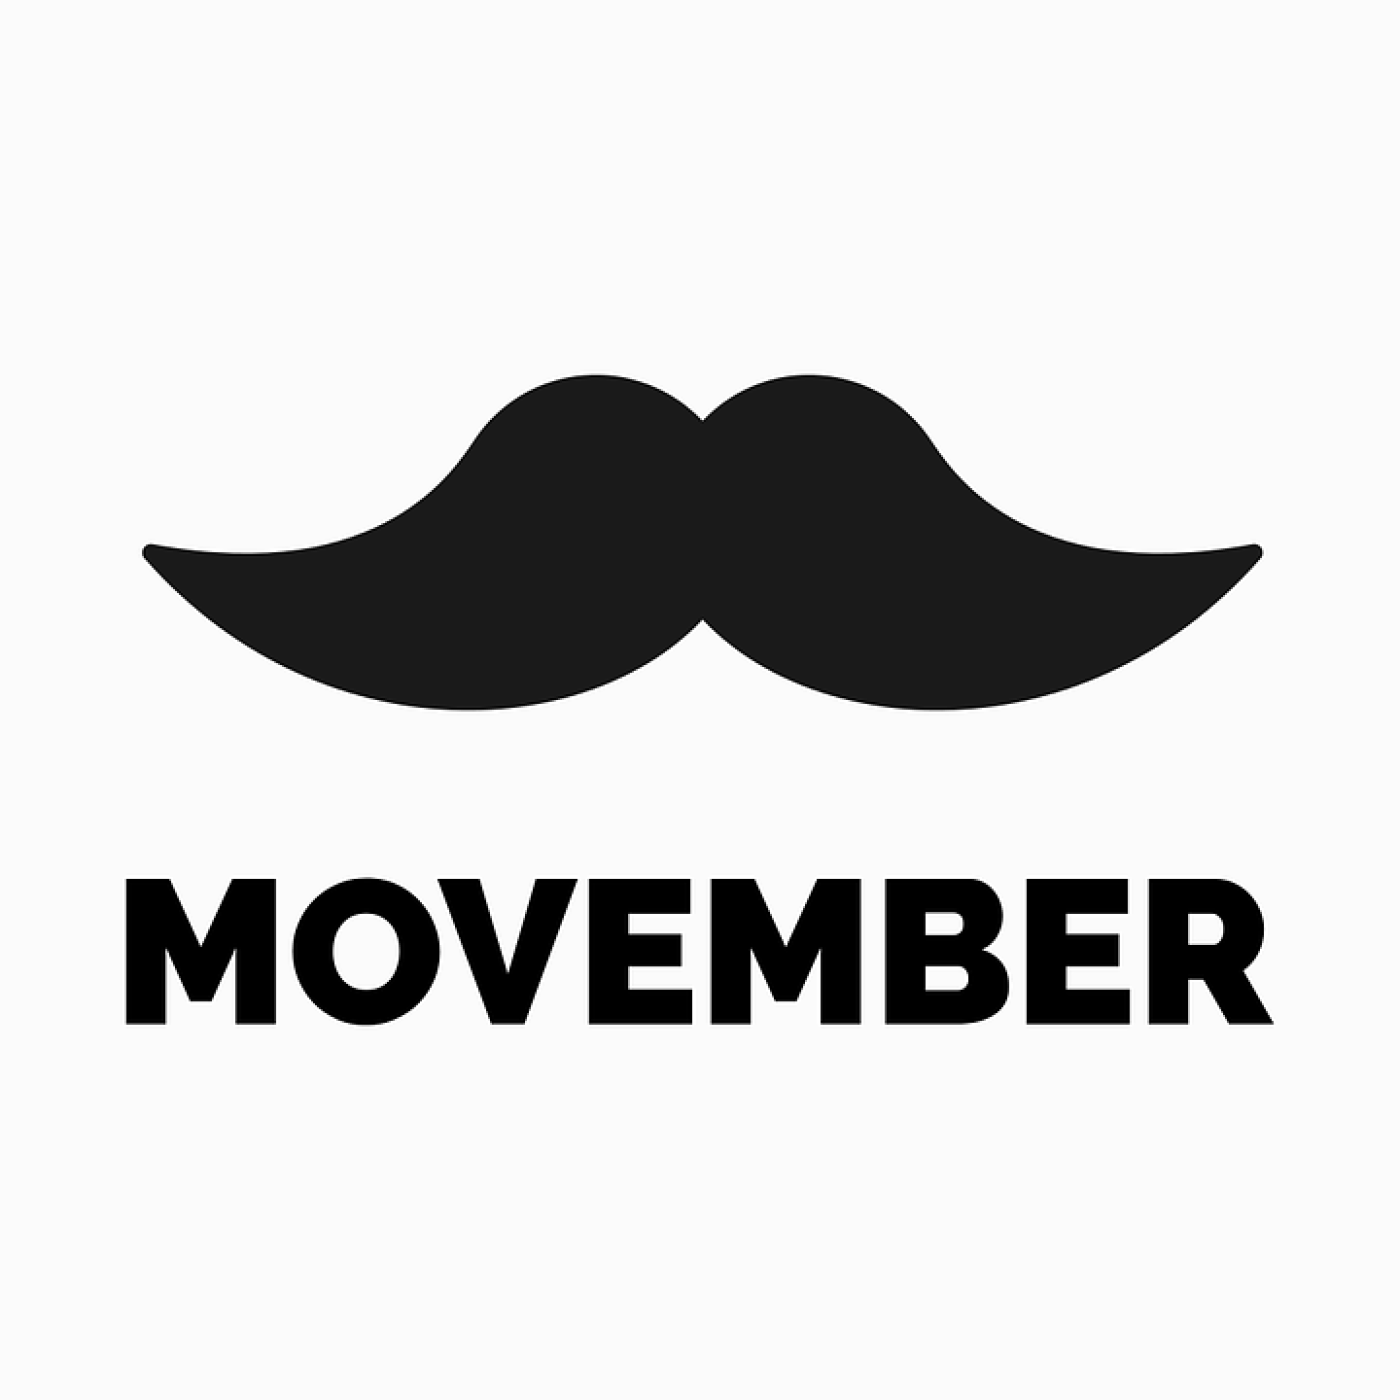 Movember